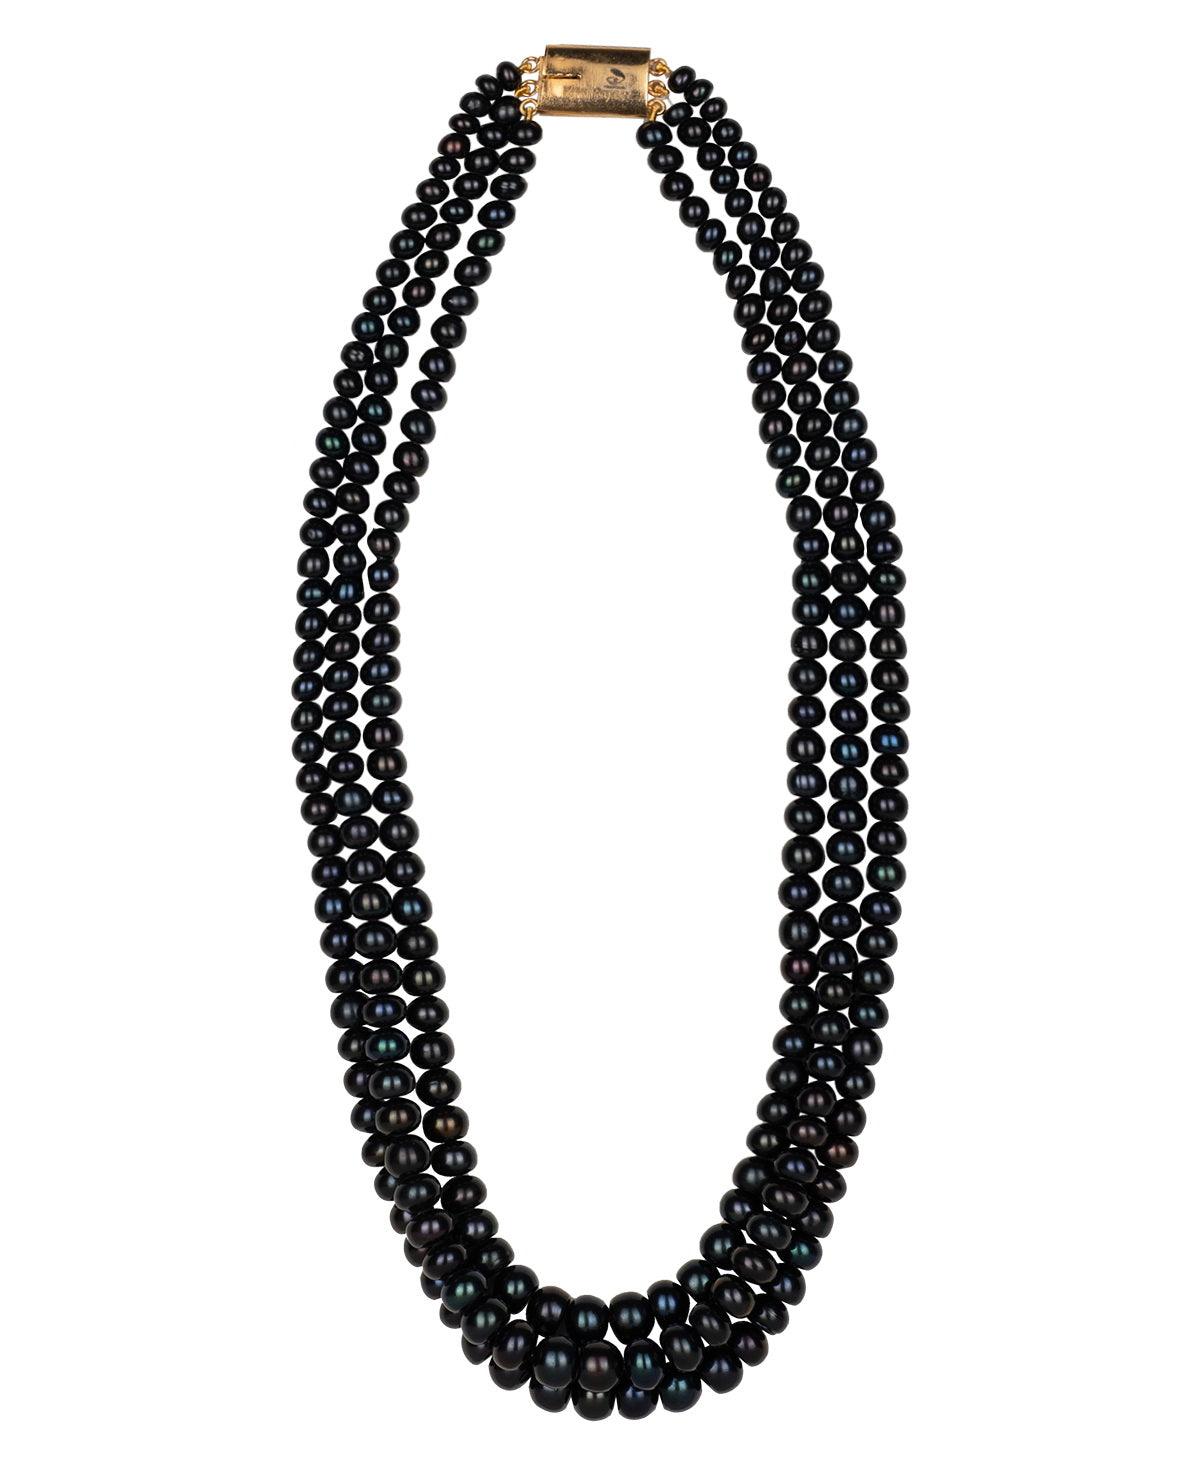 Fashionable Black Pearl Necklace - Chandrani Pearls